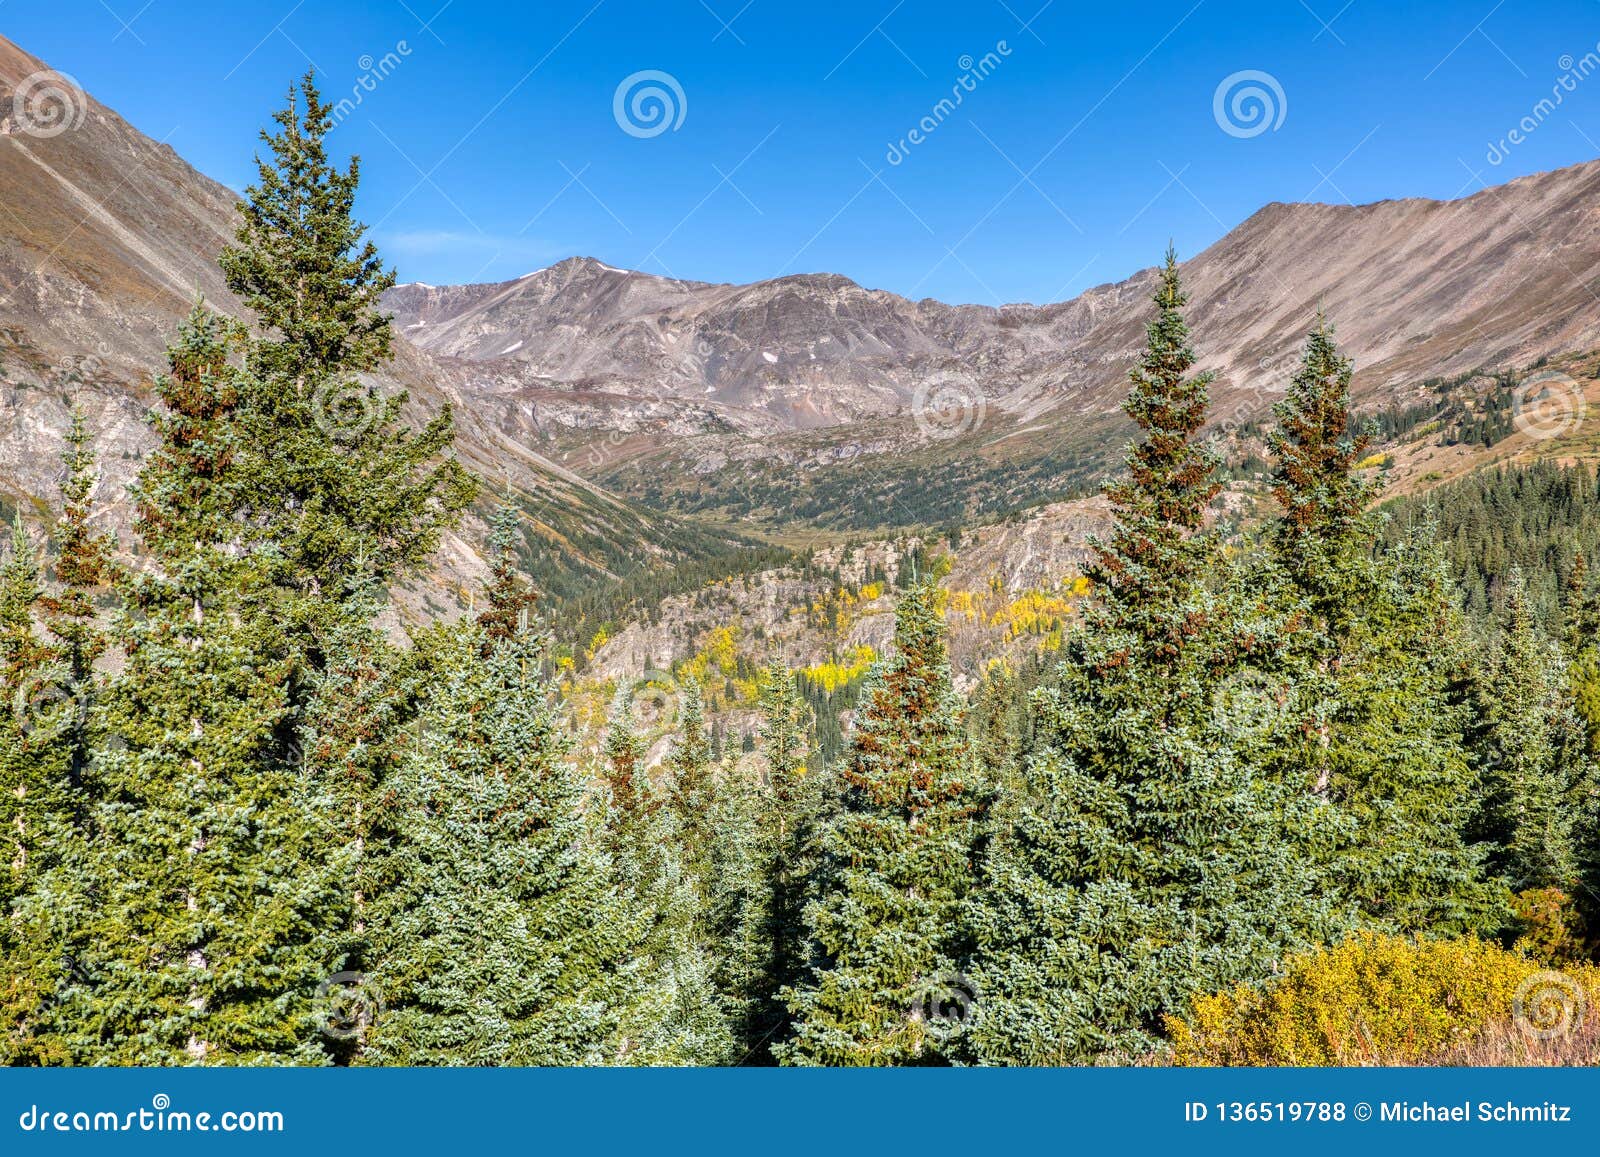 steep mountain peaks and green pine trees near the summit of hoosier pass.